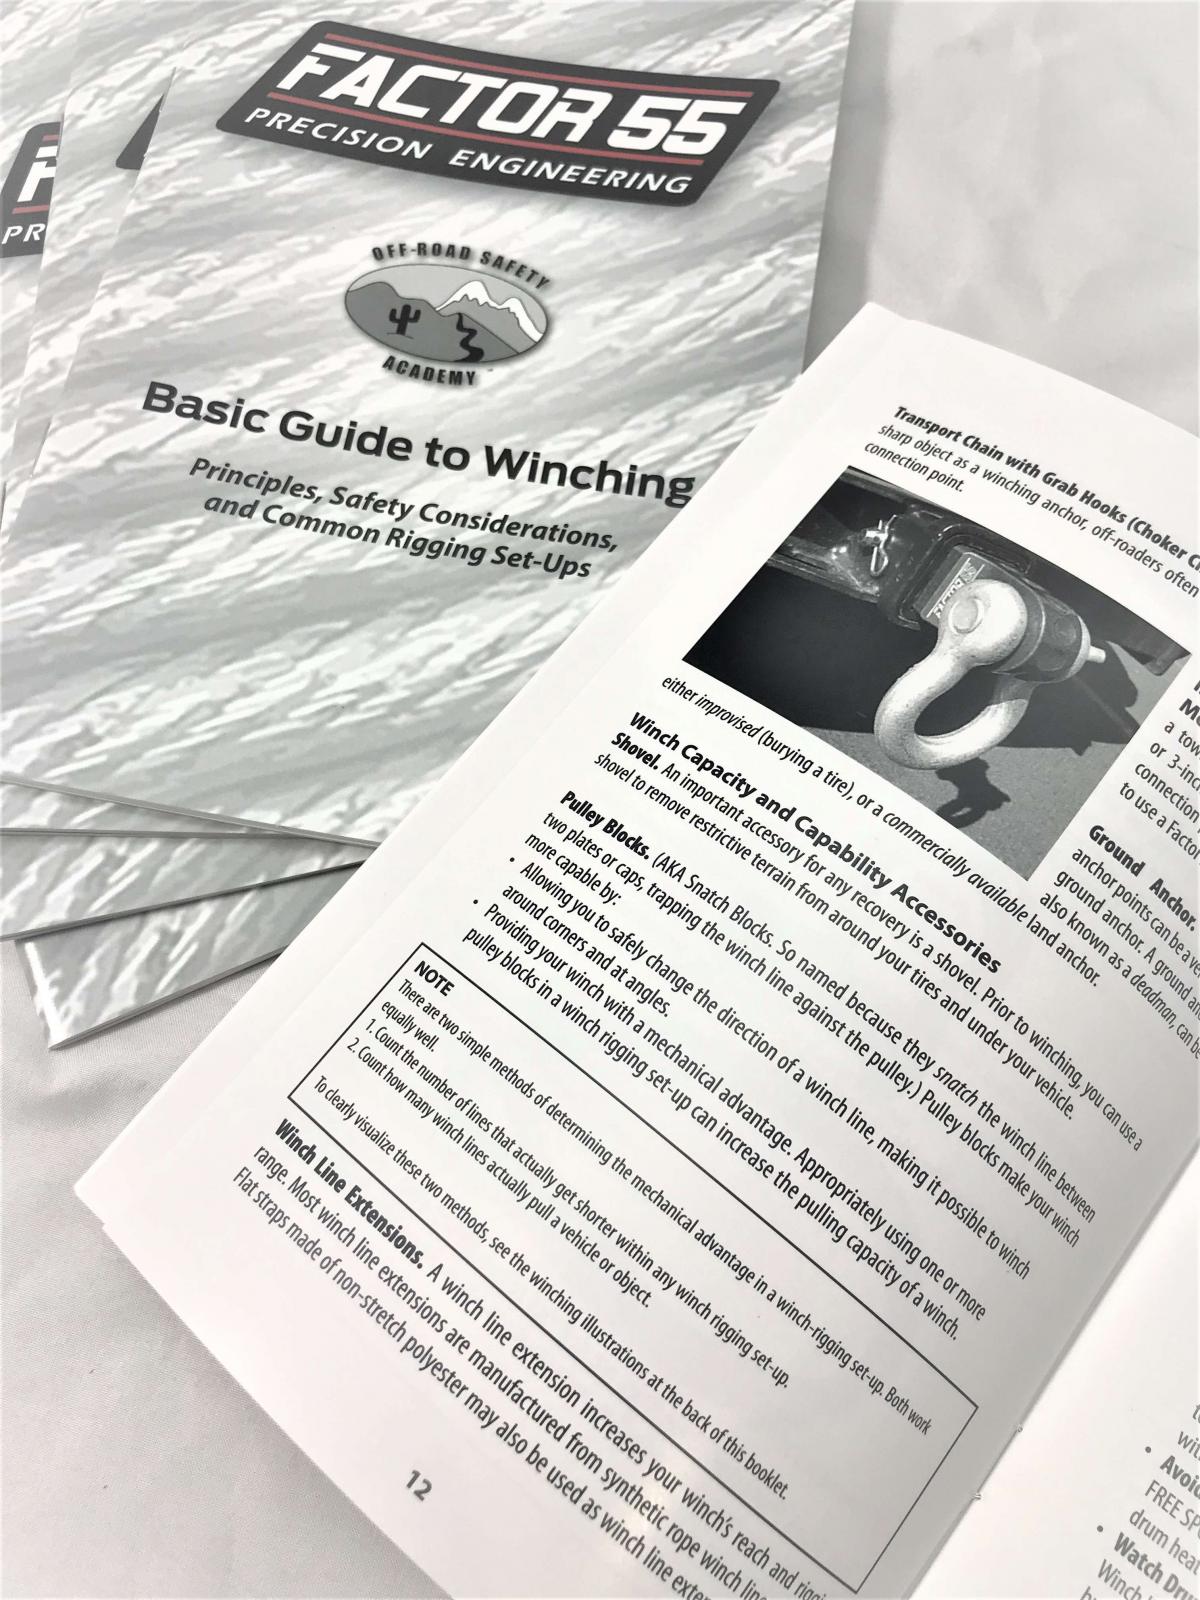 Factor 55 Basic Guide To Winching Manual Factor 55